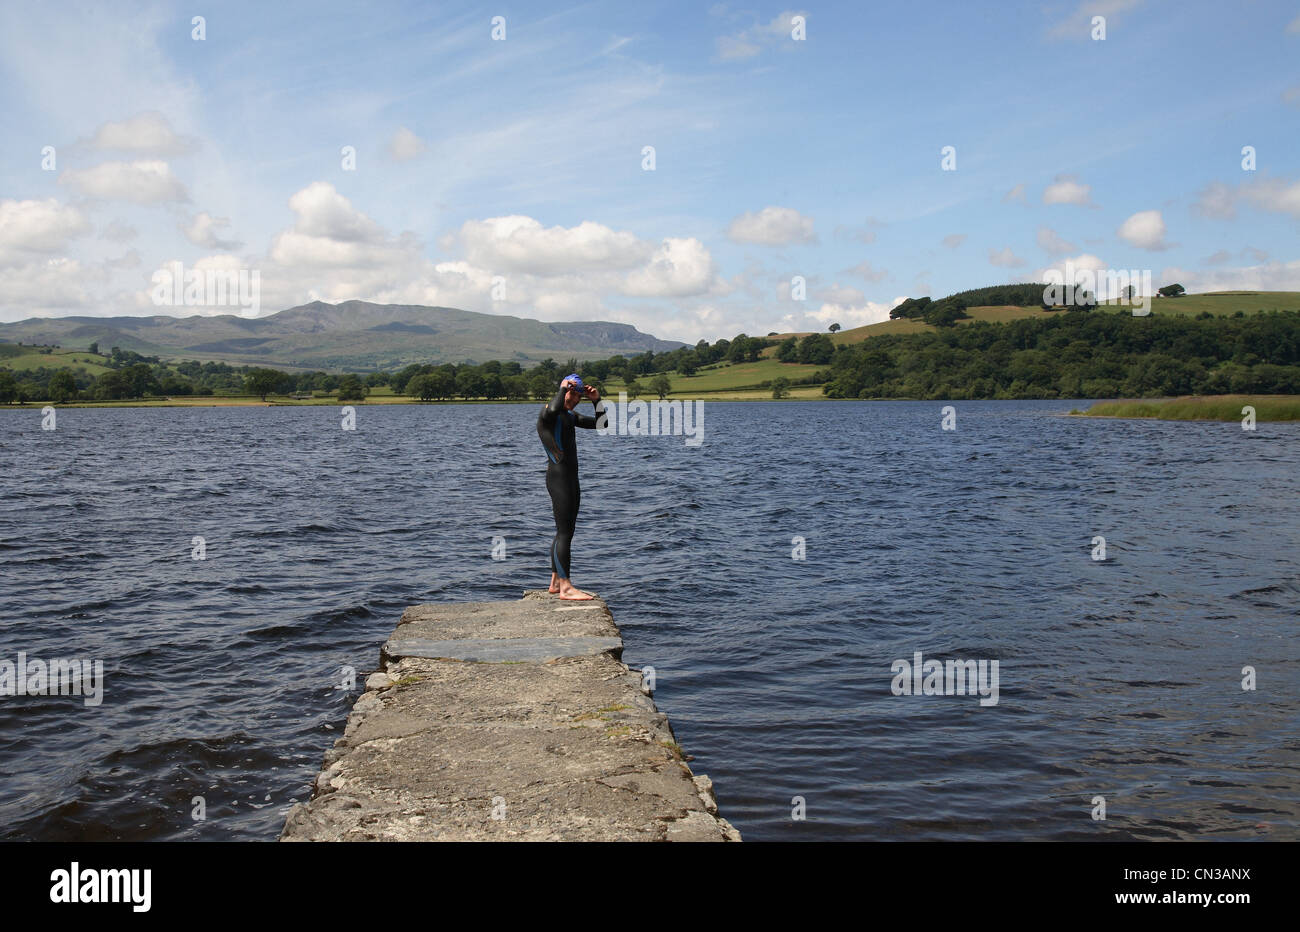 Triathlete swimmer standing on jetty Stock Photo